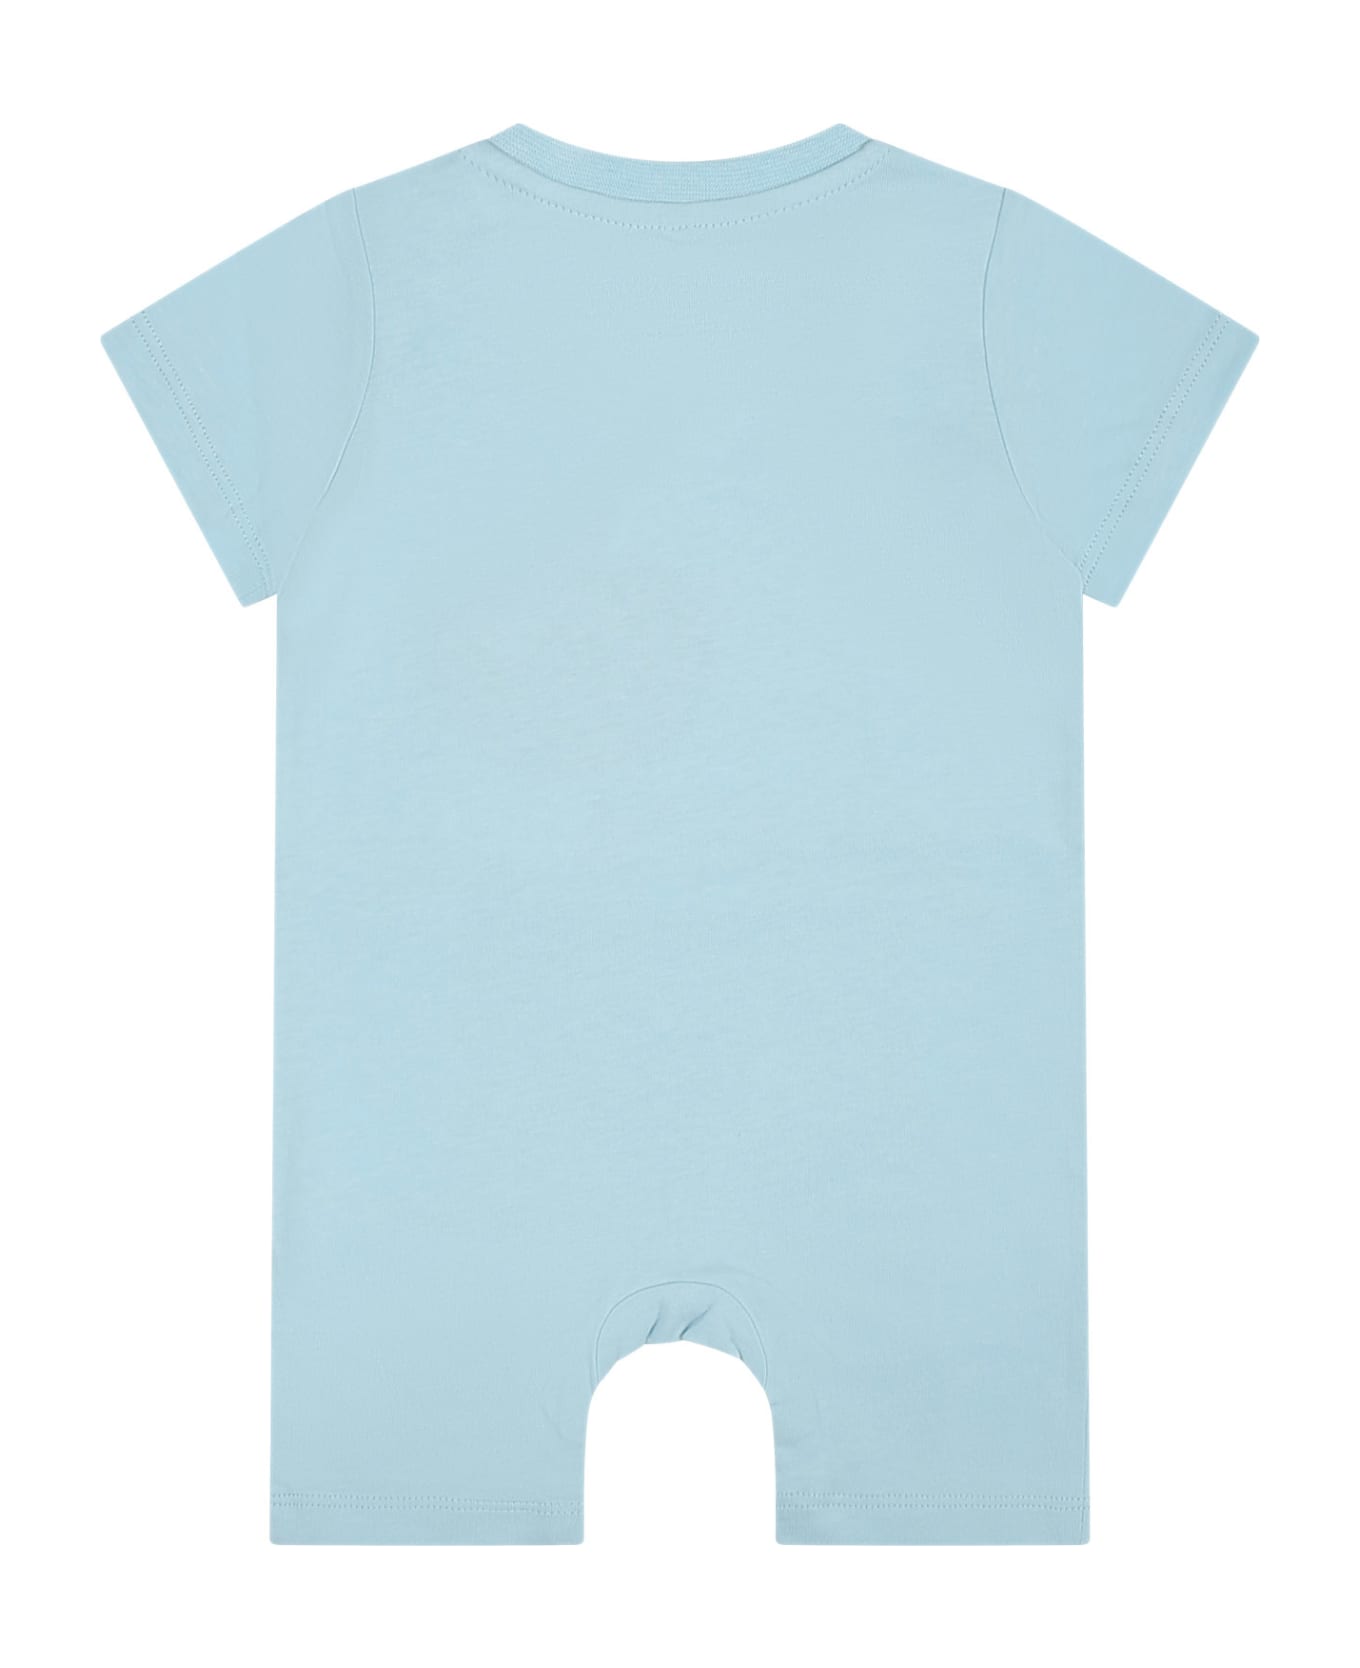 Stella McCartney Kids Light Blue Romper For Baby Boy With Hammerhead Shark Print - Light Blue